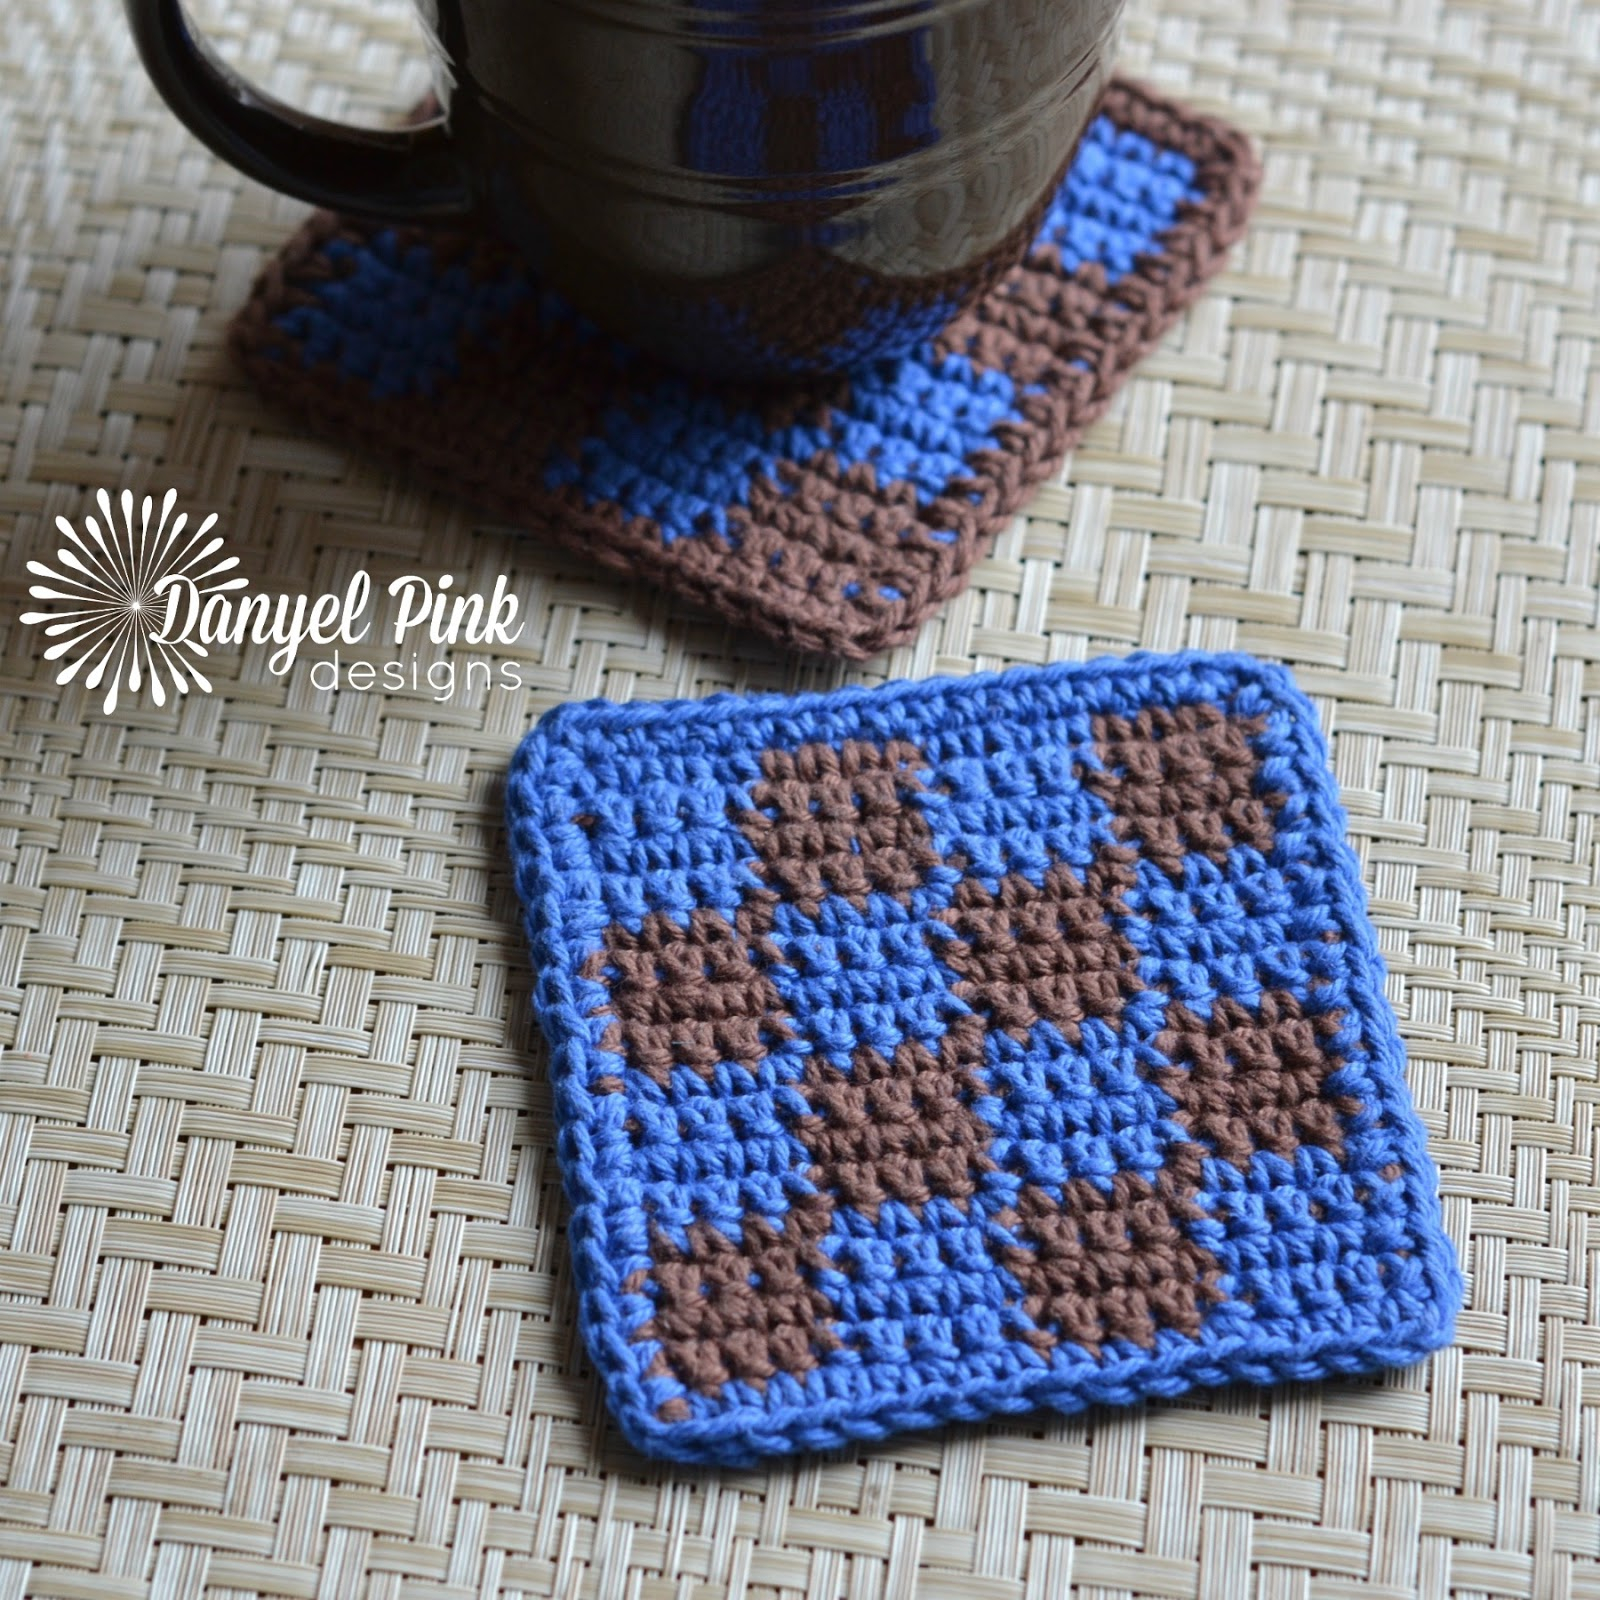 Coaster Crochet Pattern Danyel Pink Designs Crochet Pattern Square Tile Coasters